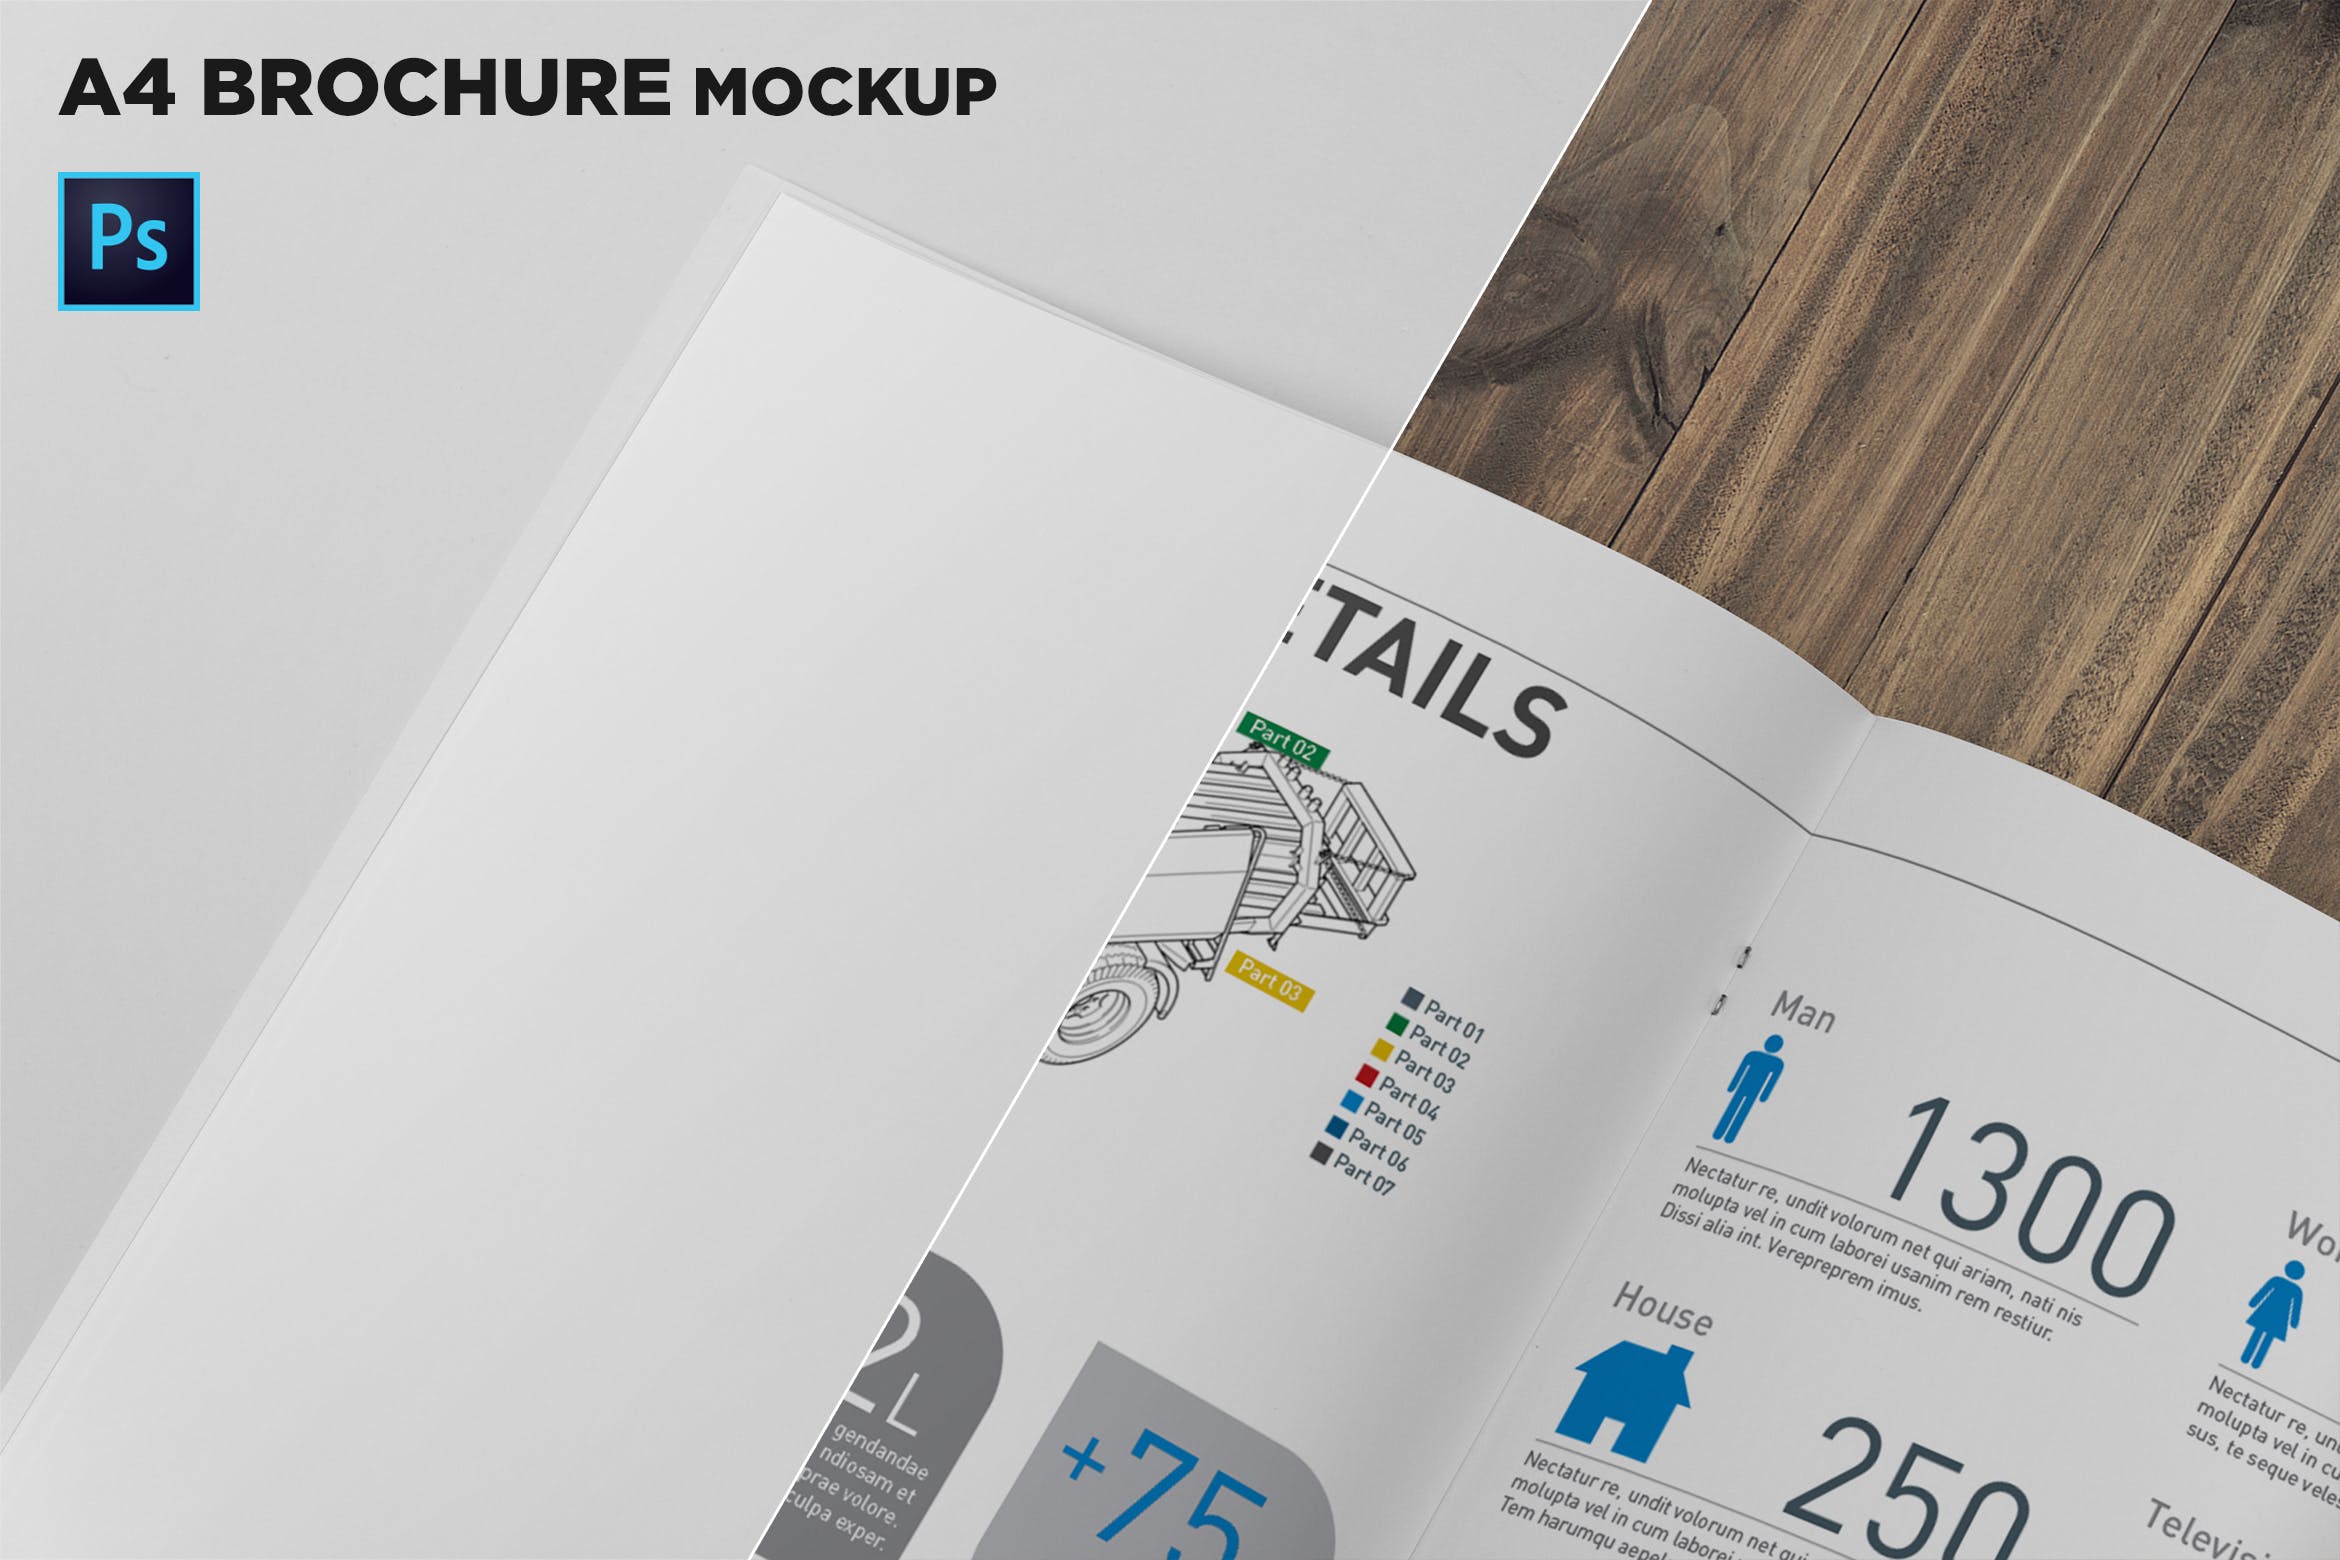 A4尺寸企业/品牌宣传册内页特写样机素材库精选模板 A4 Brochure Page Closeup Mockup插图